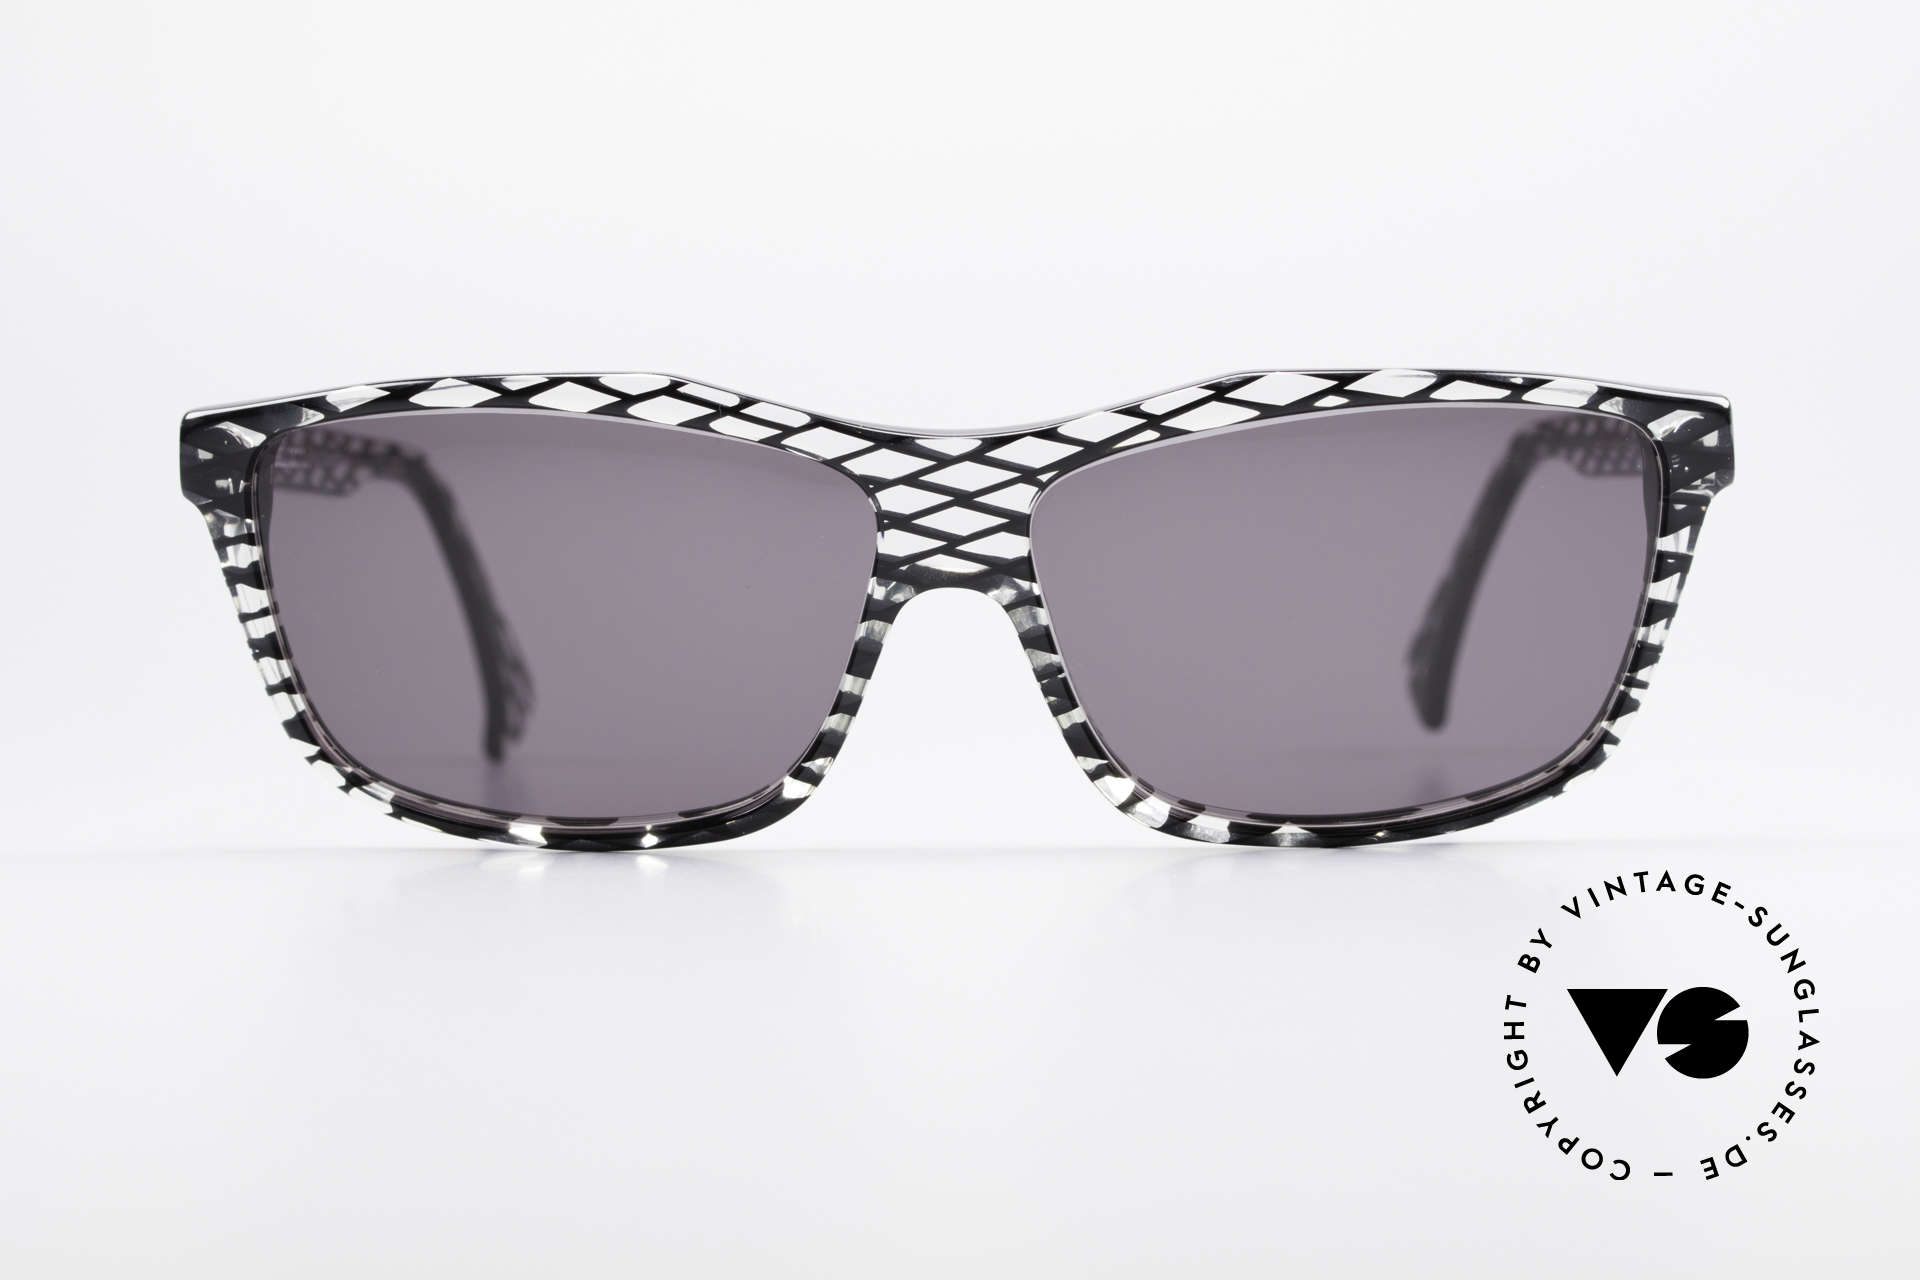 Alain Mikli 701 / 280 Designer Sunglasses Ladies, terrific frame pattern: crystal / black netted; unique!, Made for Women